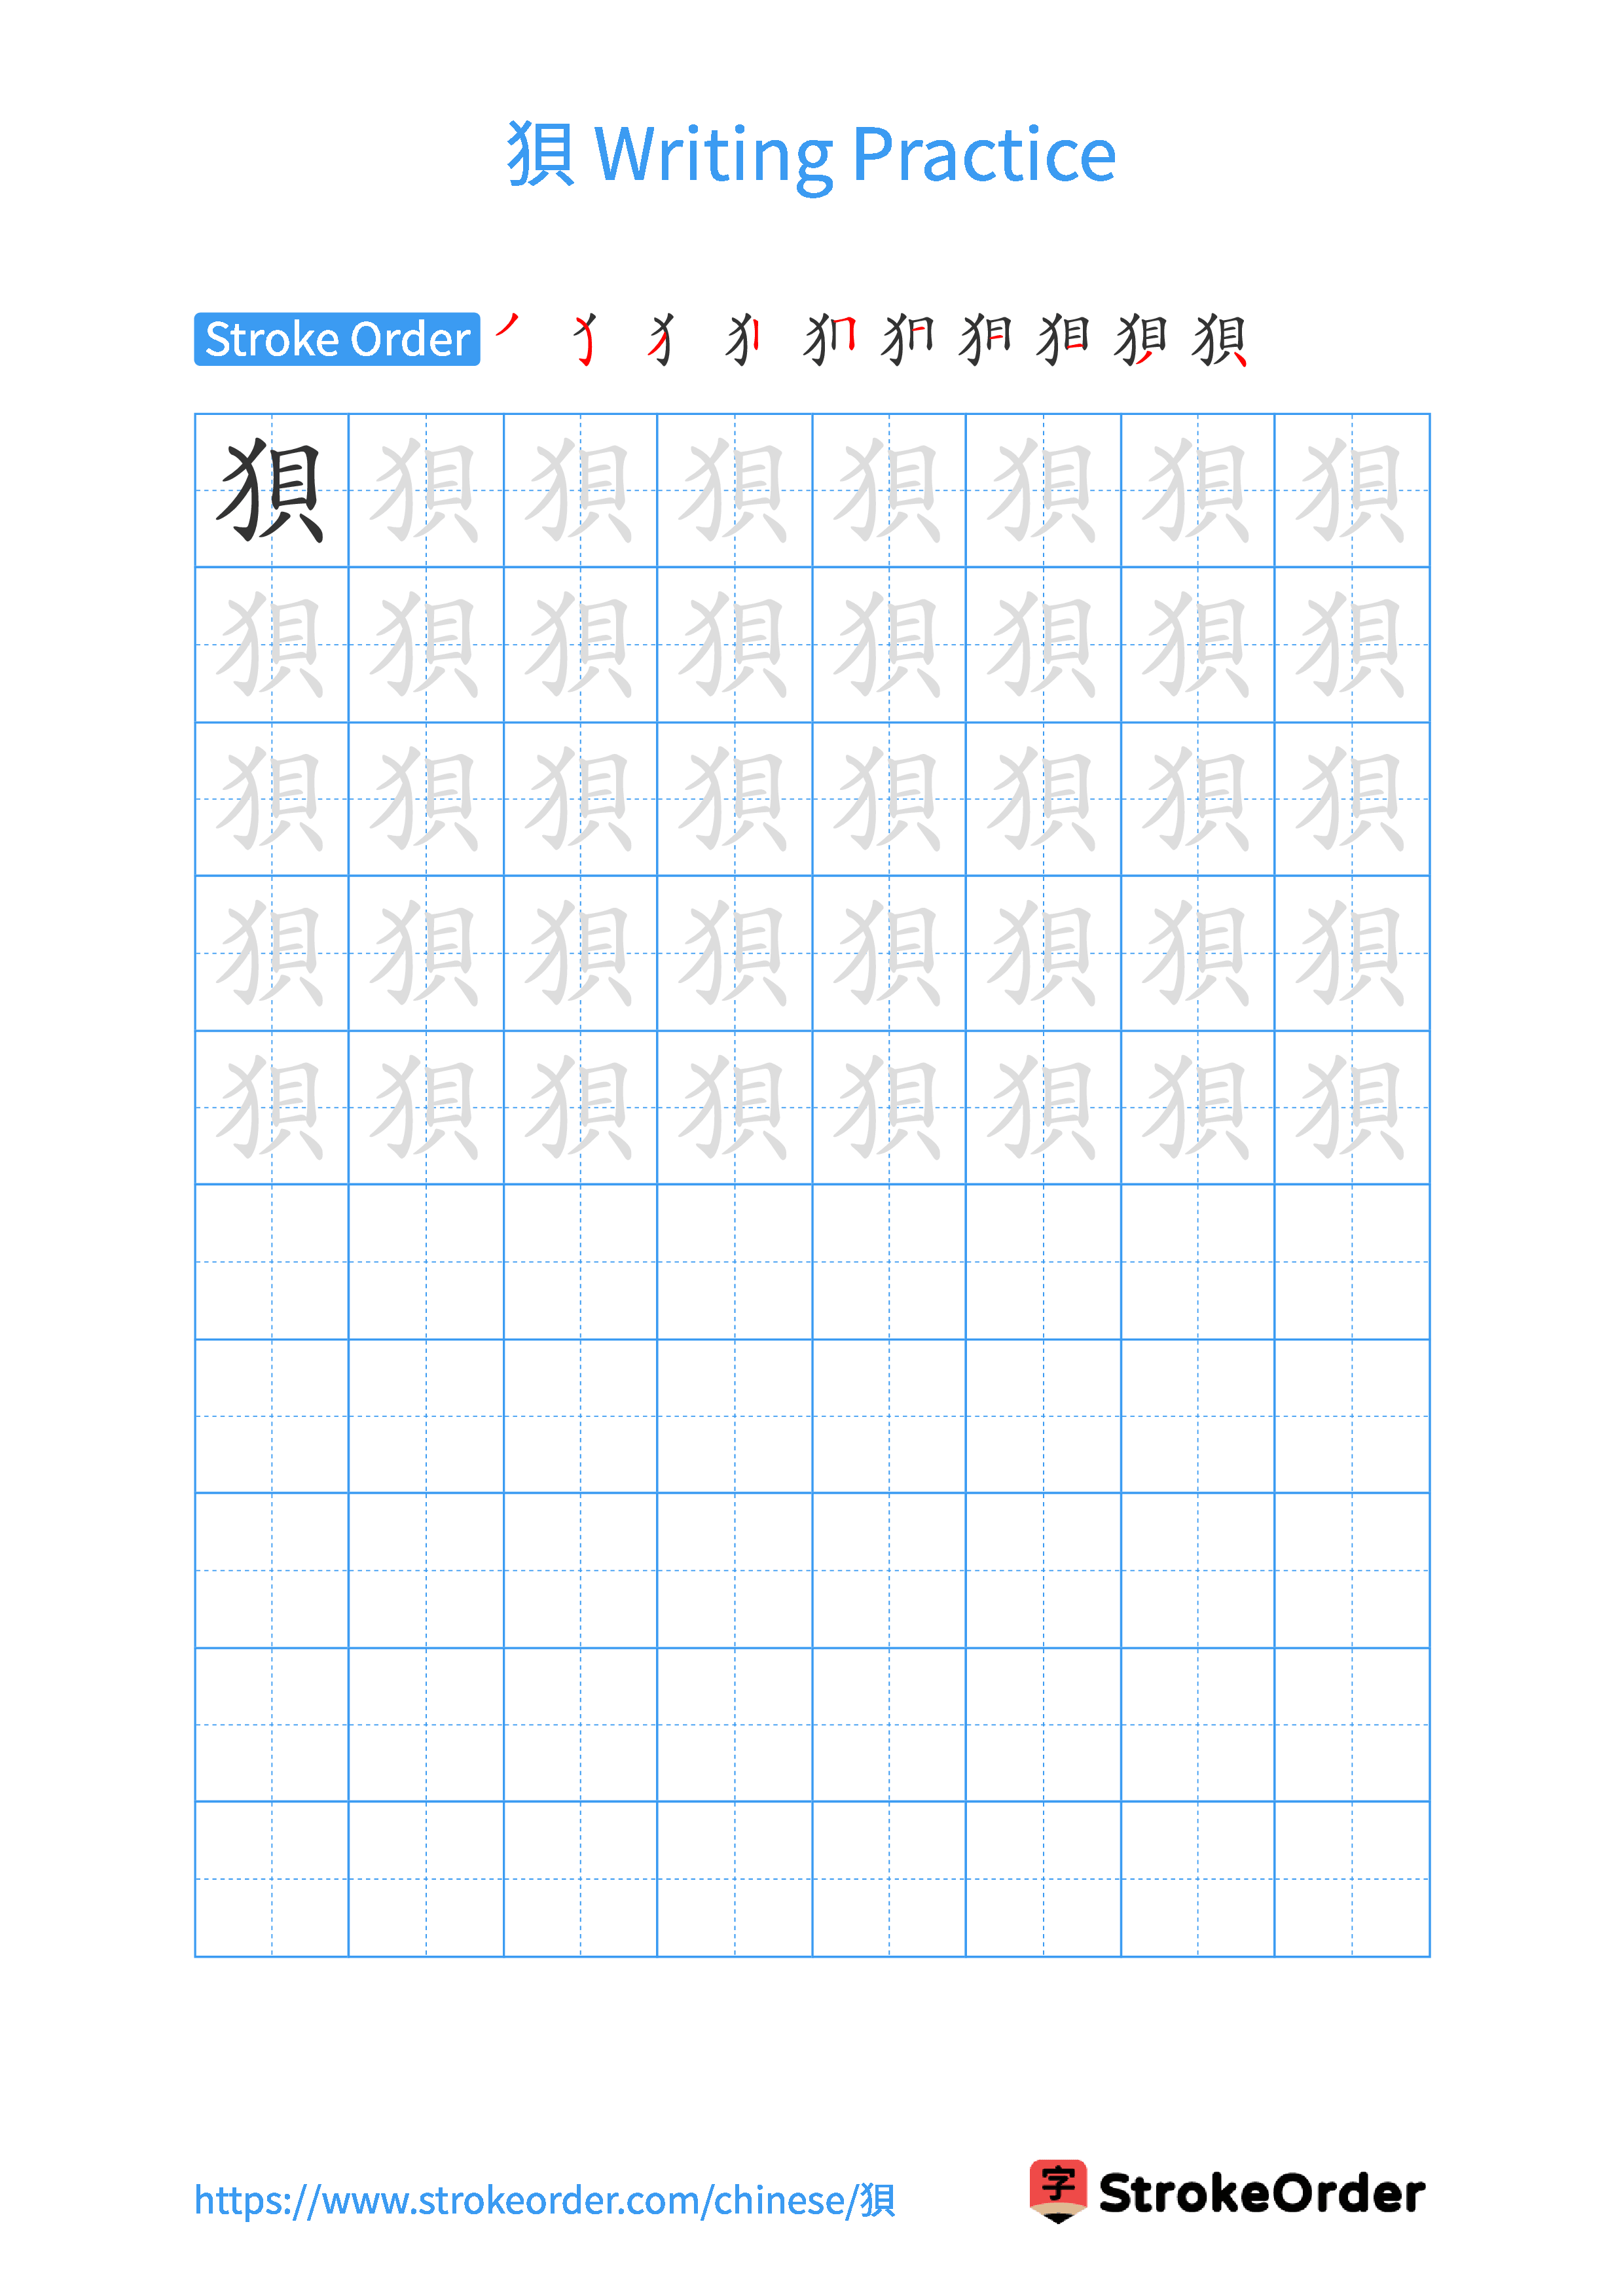 Printable Handwriting Practice Worksheet of the Chinese character 狽 in Portrait Orientation (Tian Zi Ge)